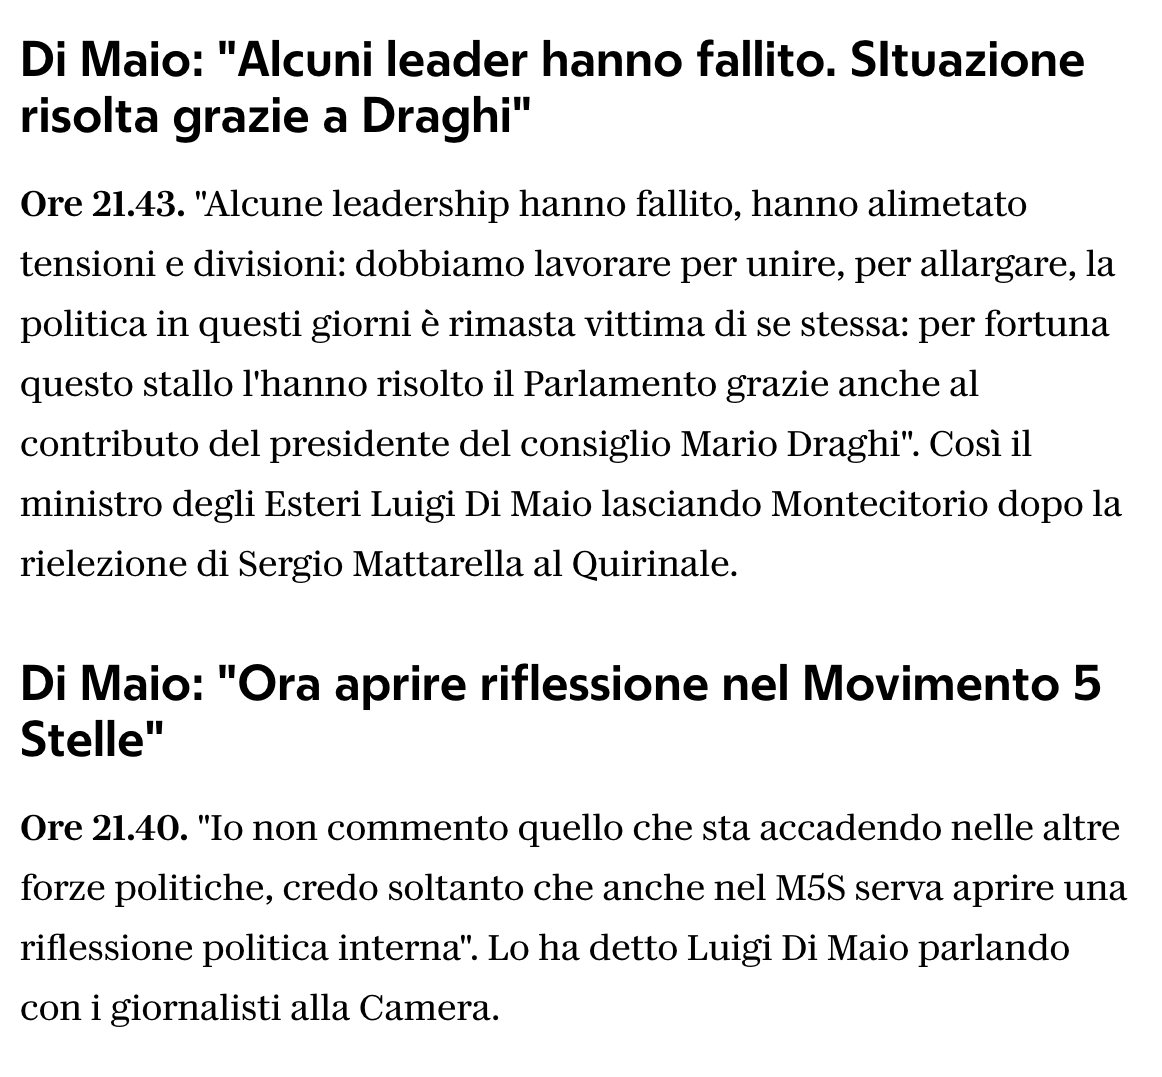 Tweet muto - 1

#DiMaio #PresidenzaDellaRepubblica #Mattarella